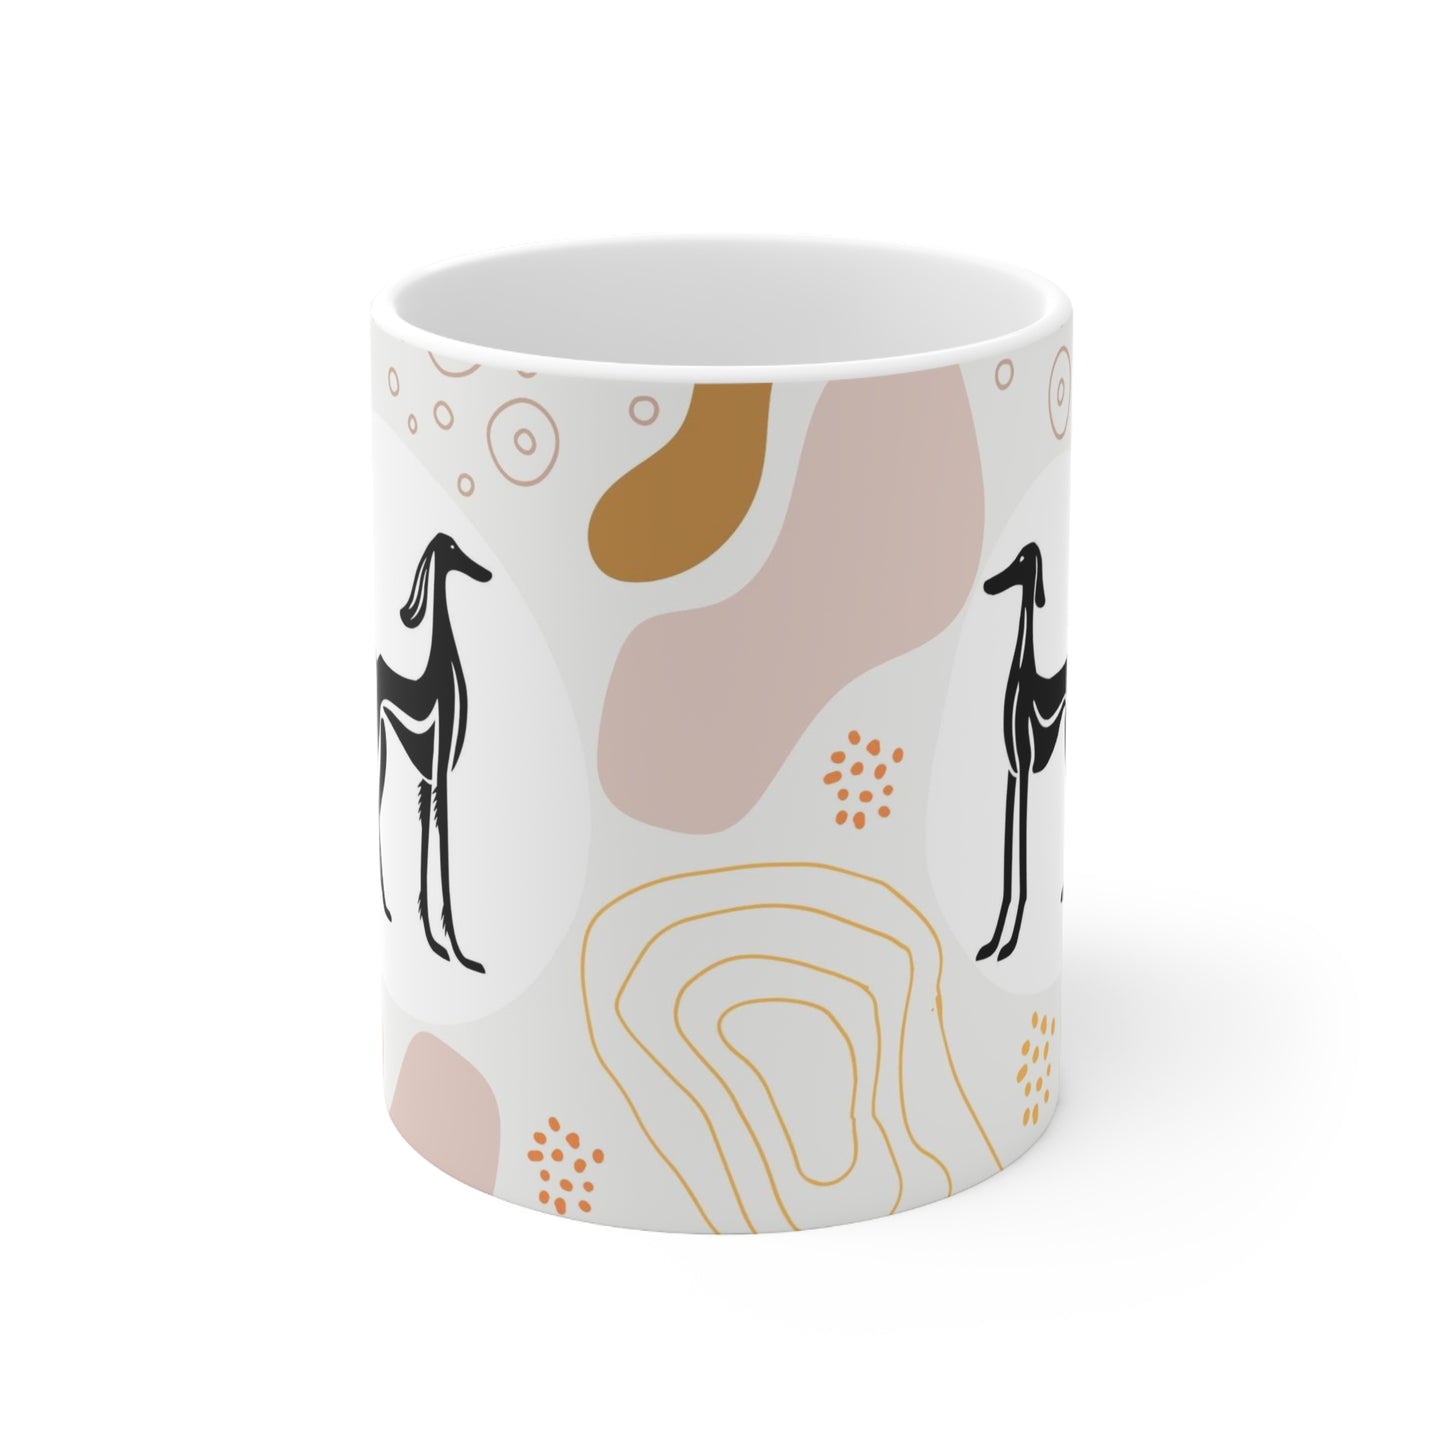 SALUKI ART IN STYLISTIC ART STYLE on an 11 oz Ceramic Coffee Cup